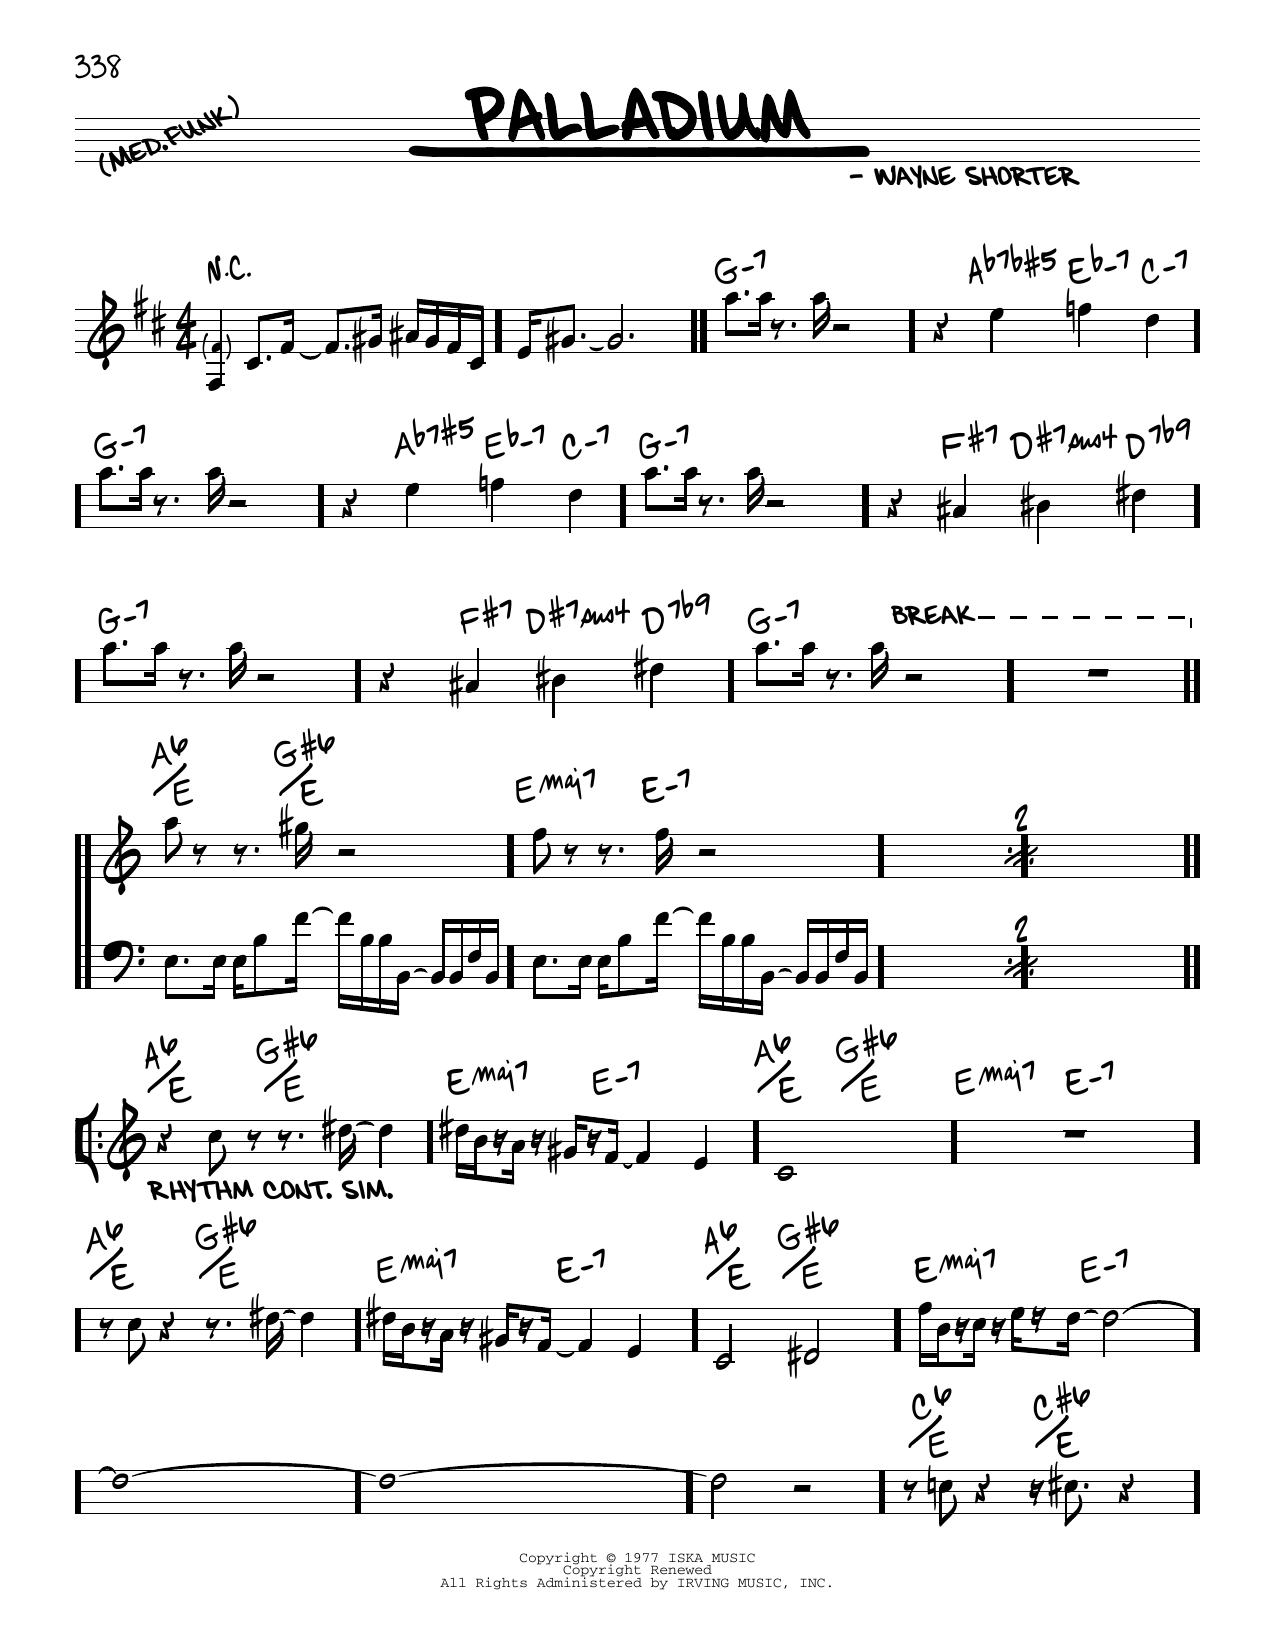 Wayne Shorter Palladium Sheet Music Notes & Chords for Real Book – Melody & Chords - Download or Print PDF